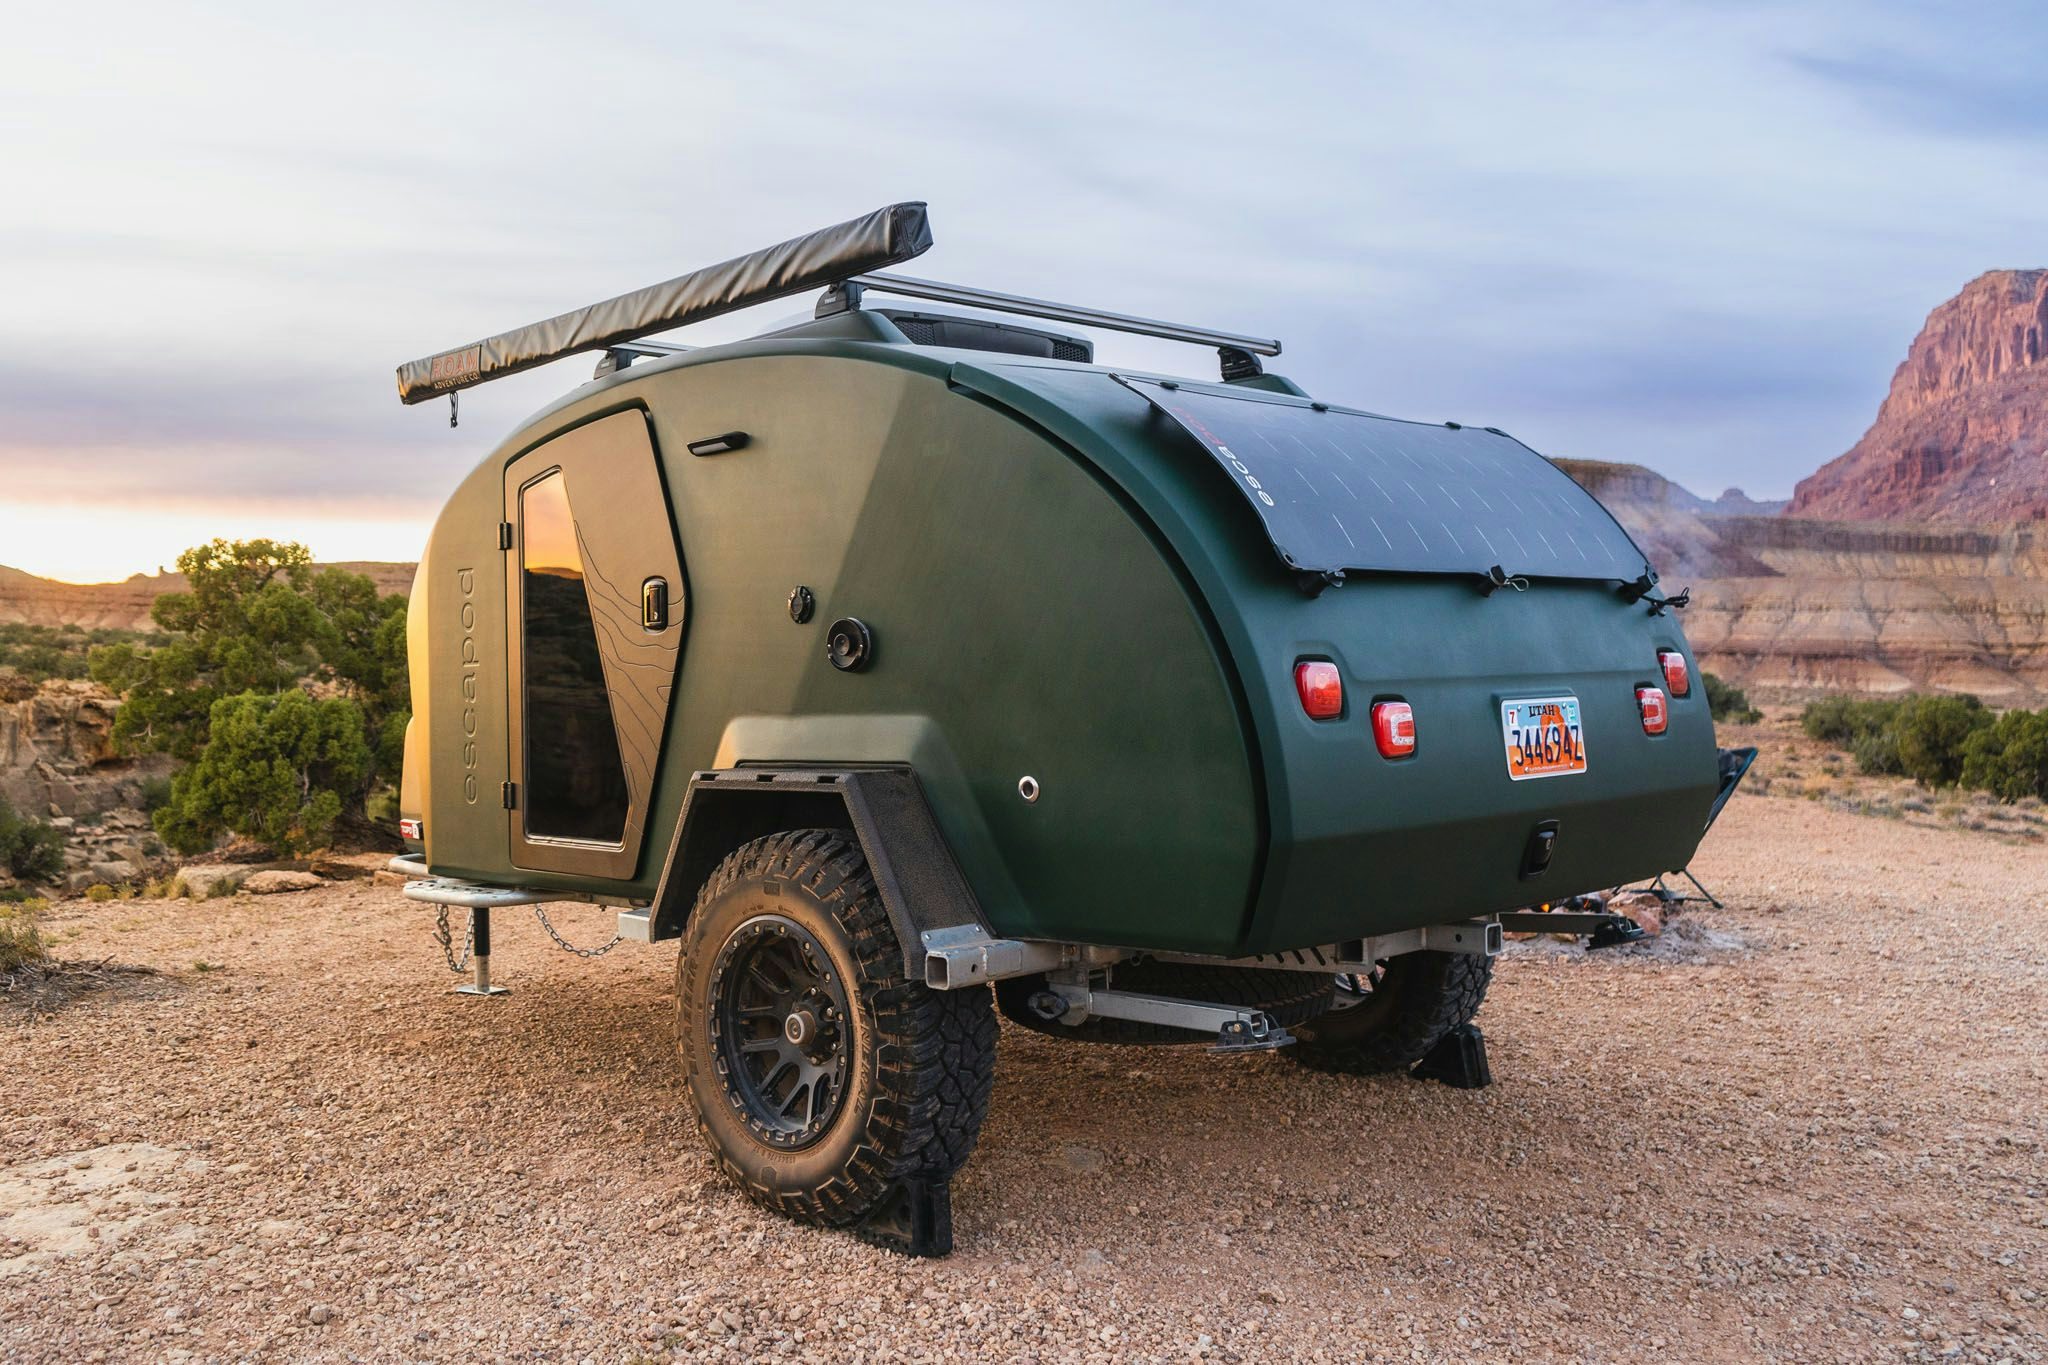 A green teardrop trailer parked in a desert landscape at sunset.